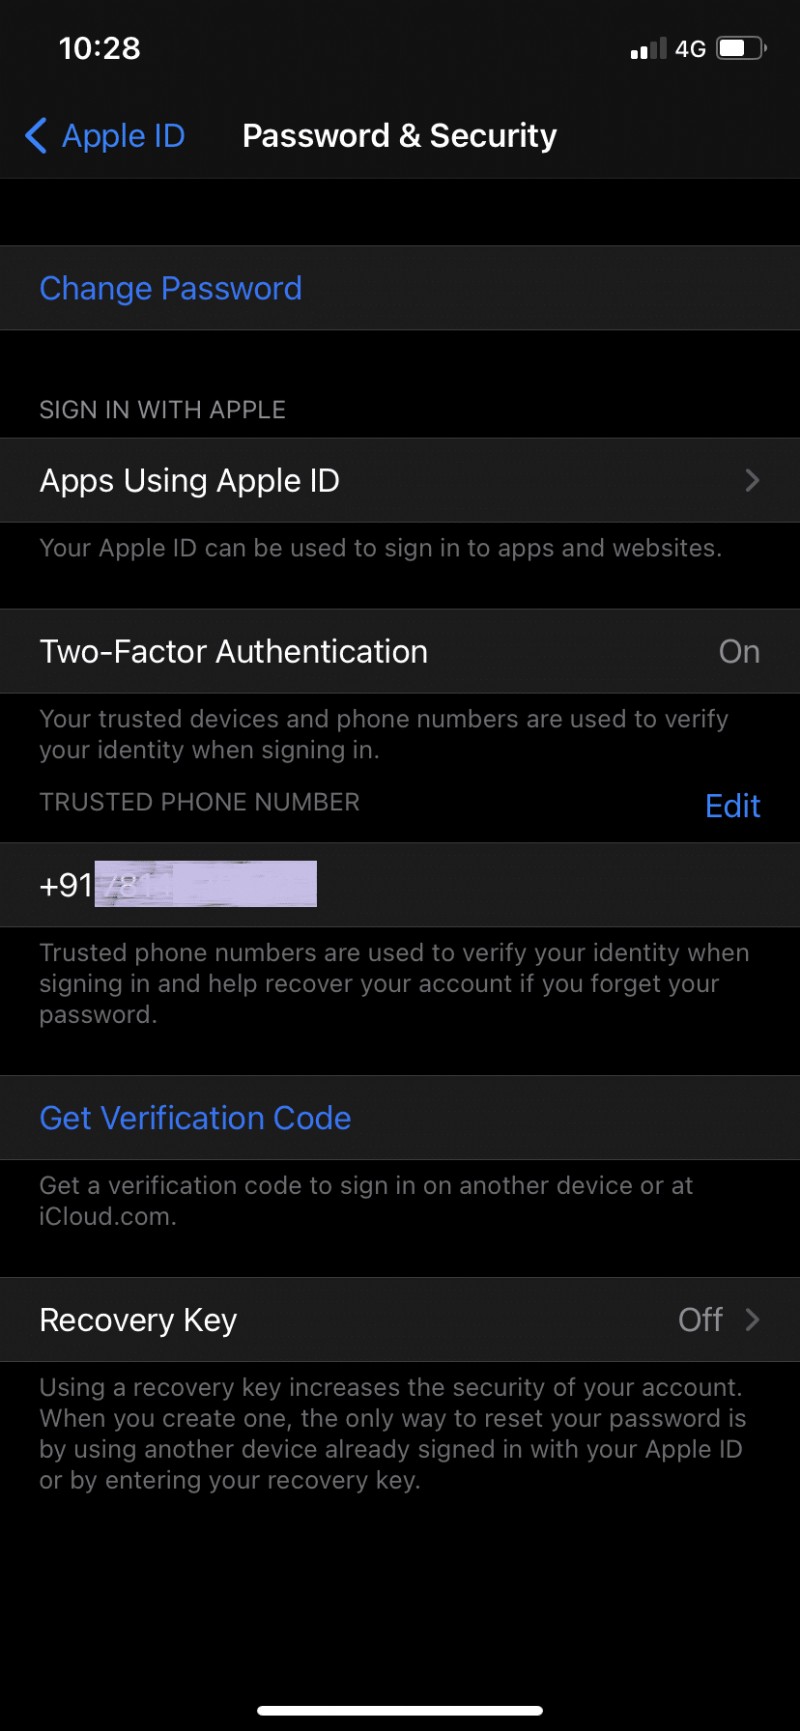 Apple IDのセキュリティ質問をリセットする方法 